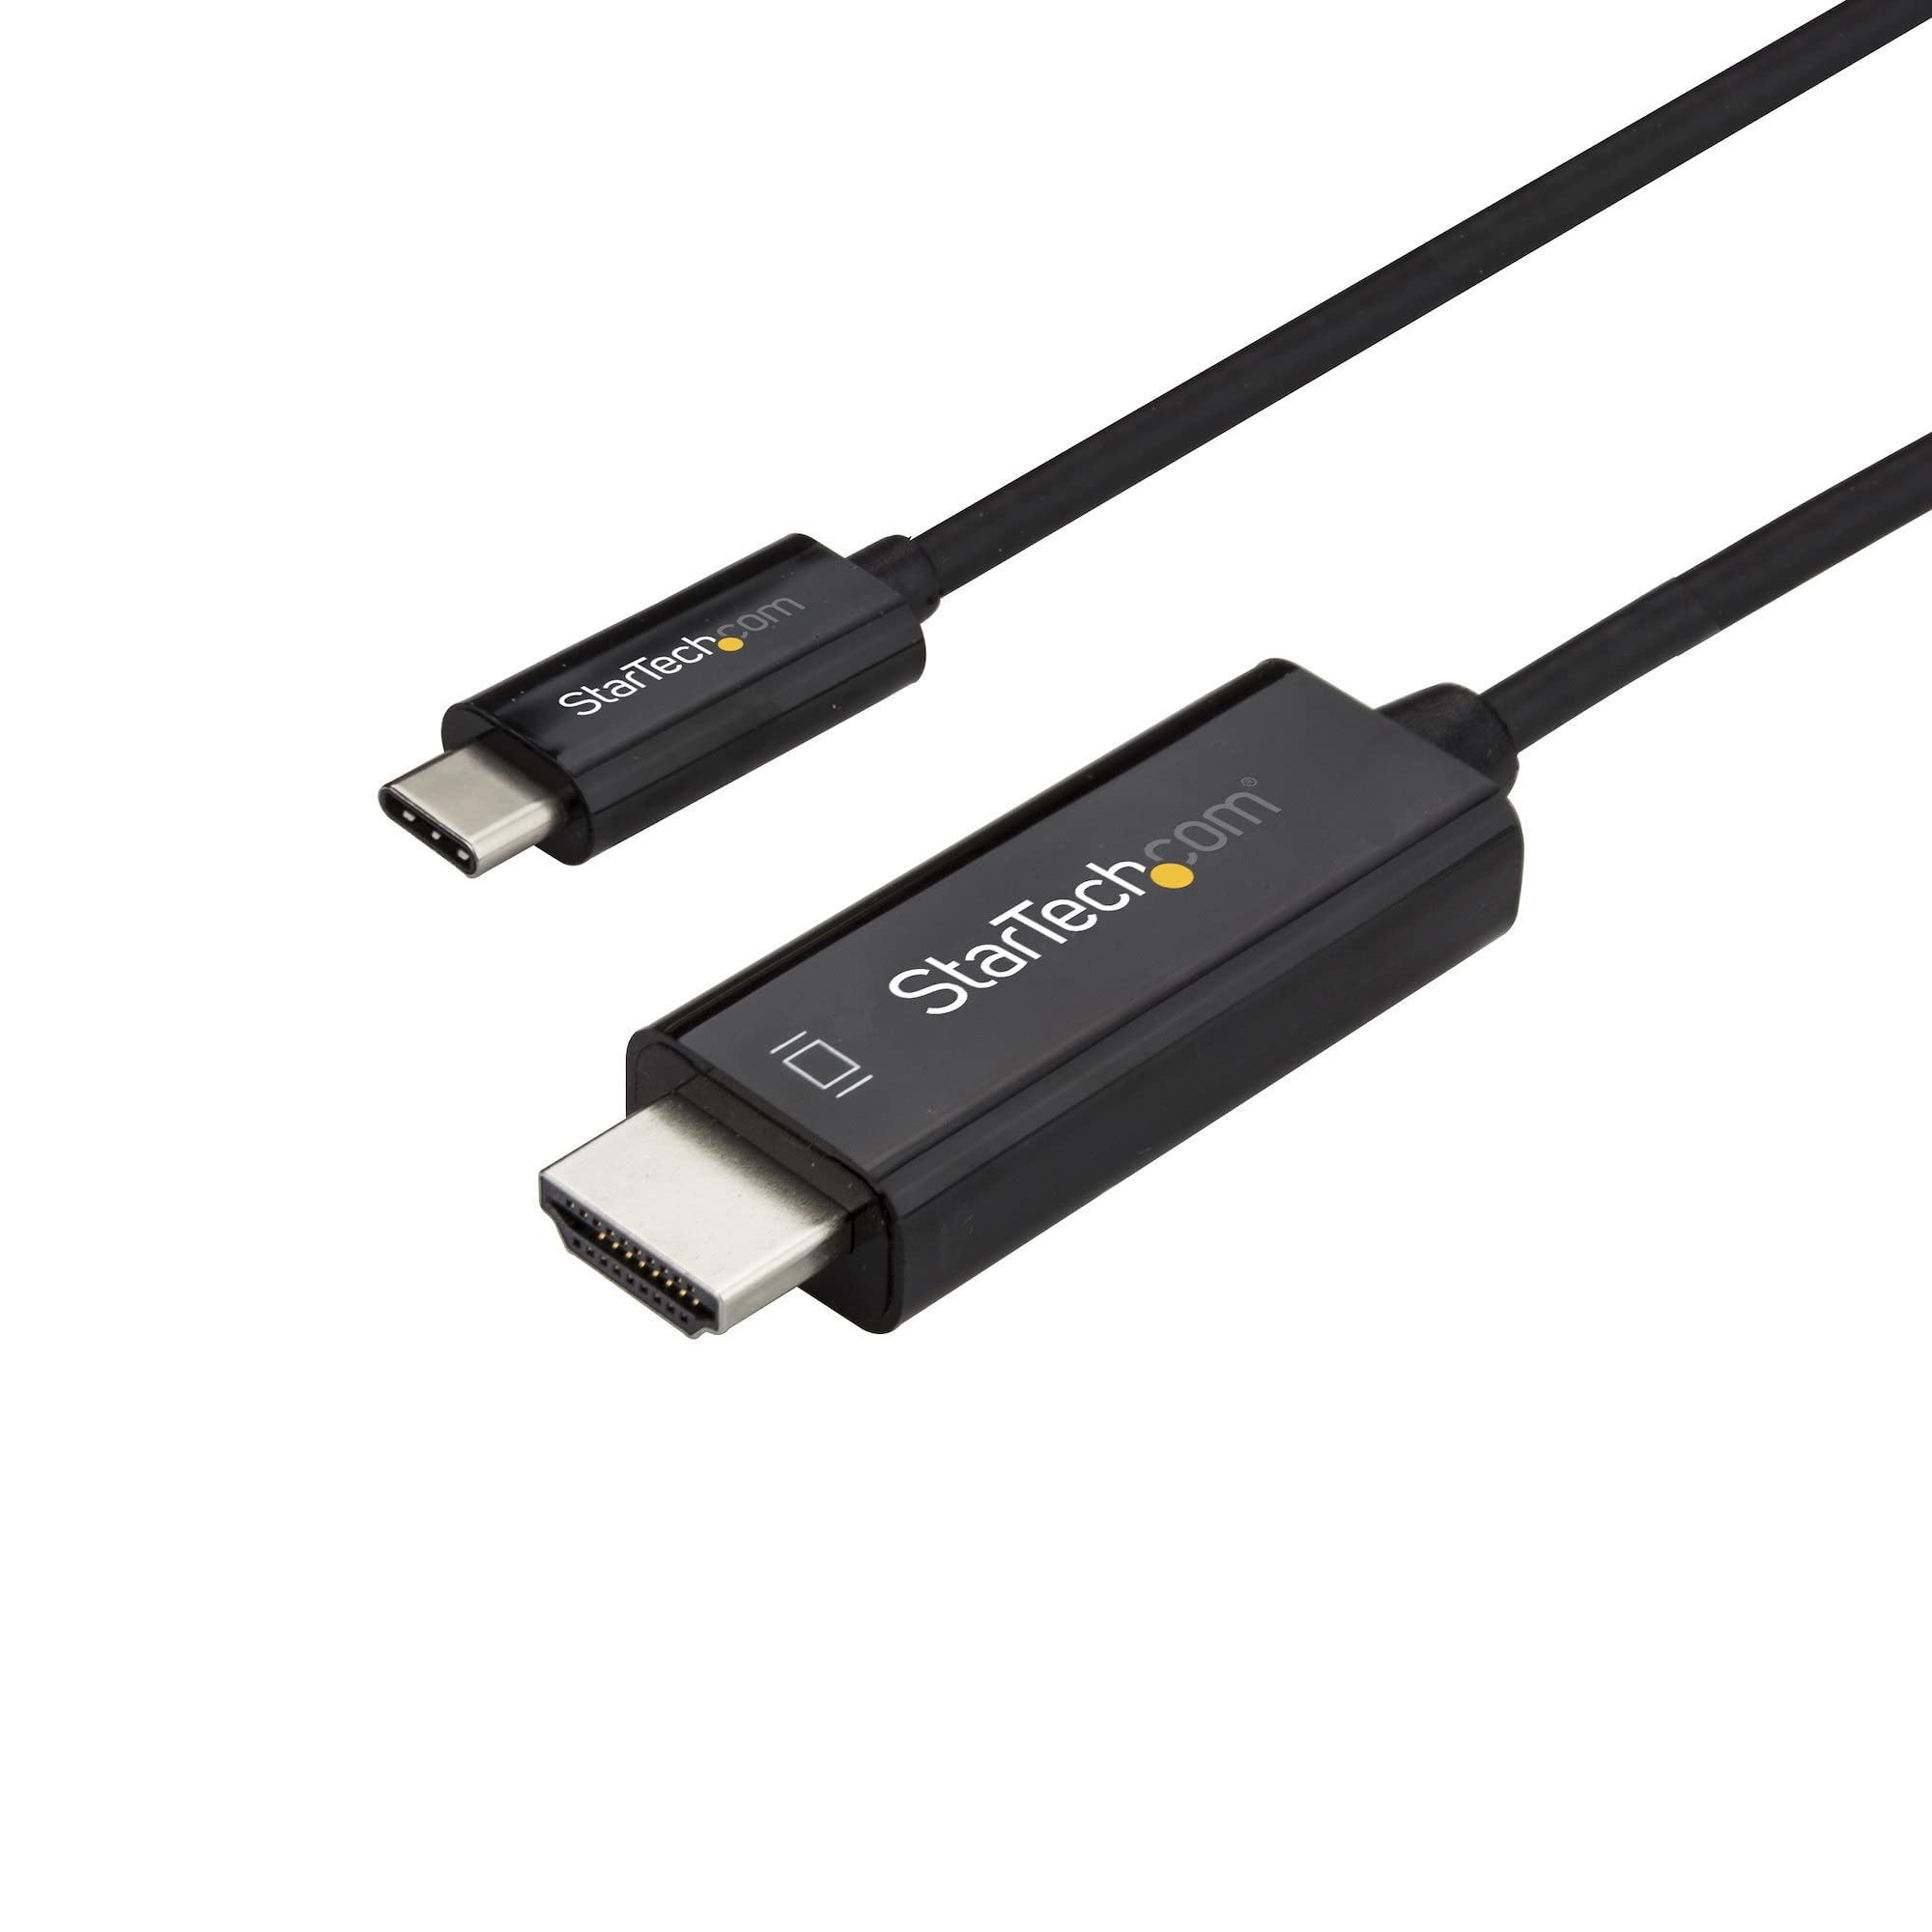 StarTech.com USB-C HDMI Kabel 1m - USB-C Video Adapter - UHD 4K 60 Hz - DP 1.2 Alt Mode HBR2 - USB-C HDMI Audio - HDMI 2.0 Type C - HDCP 2.2/1.4 - Thunderbolt 3 kompatibel - Schwarz (CDP2HD1MBNL)